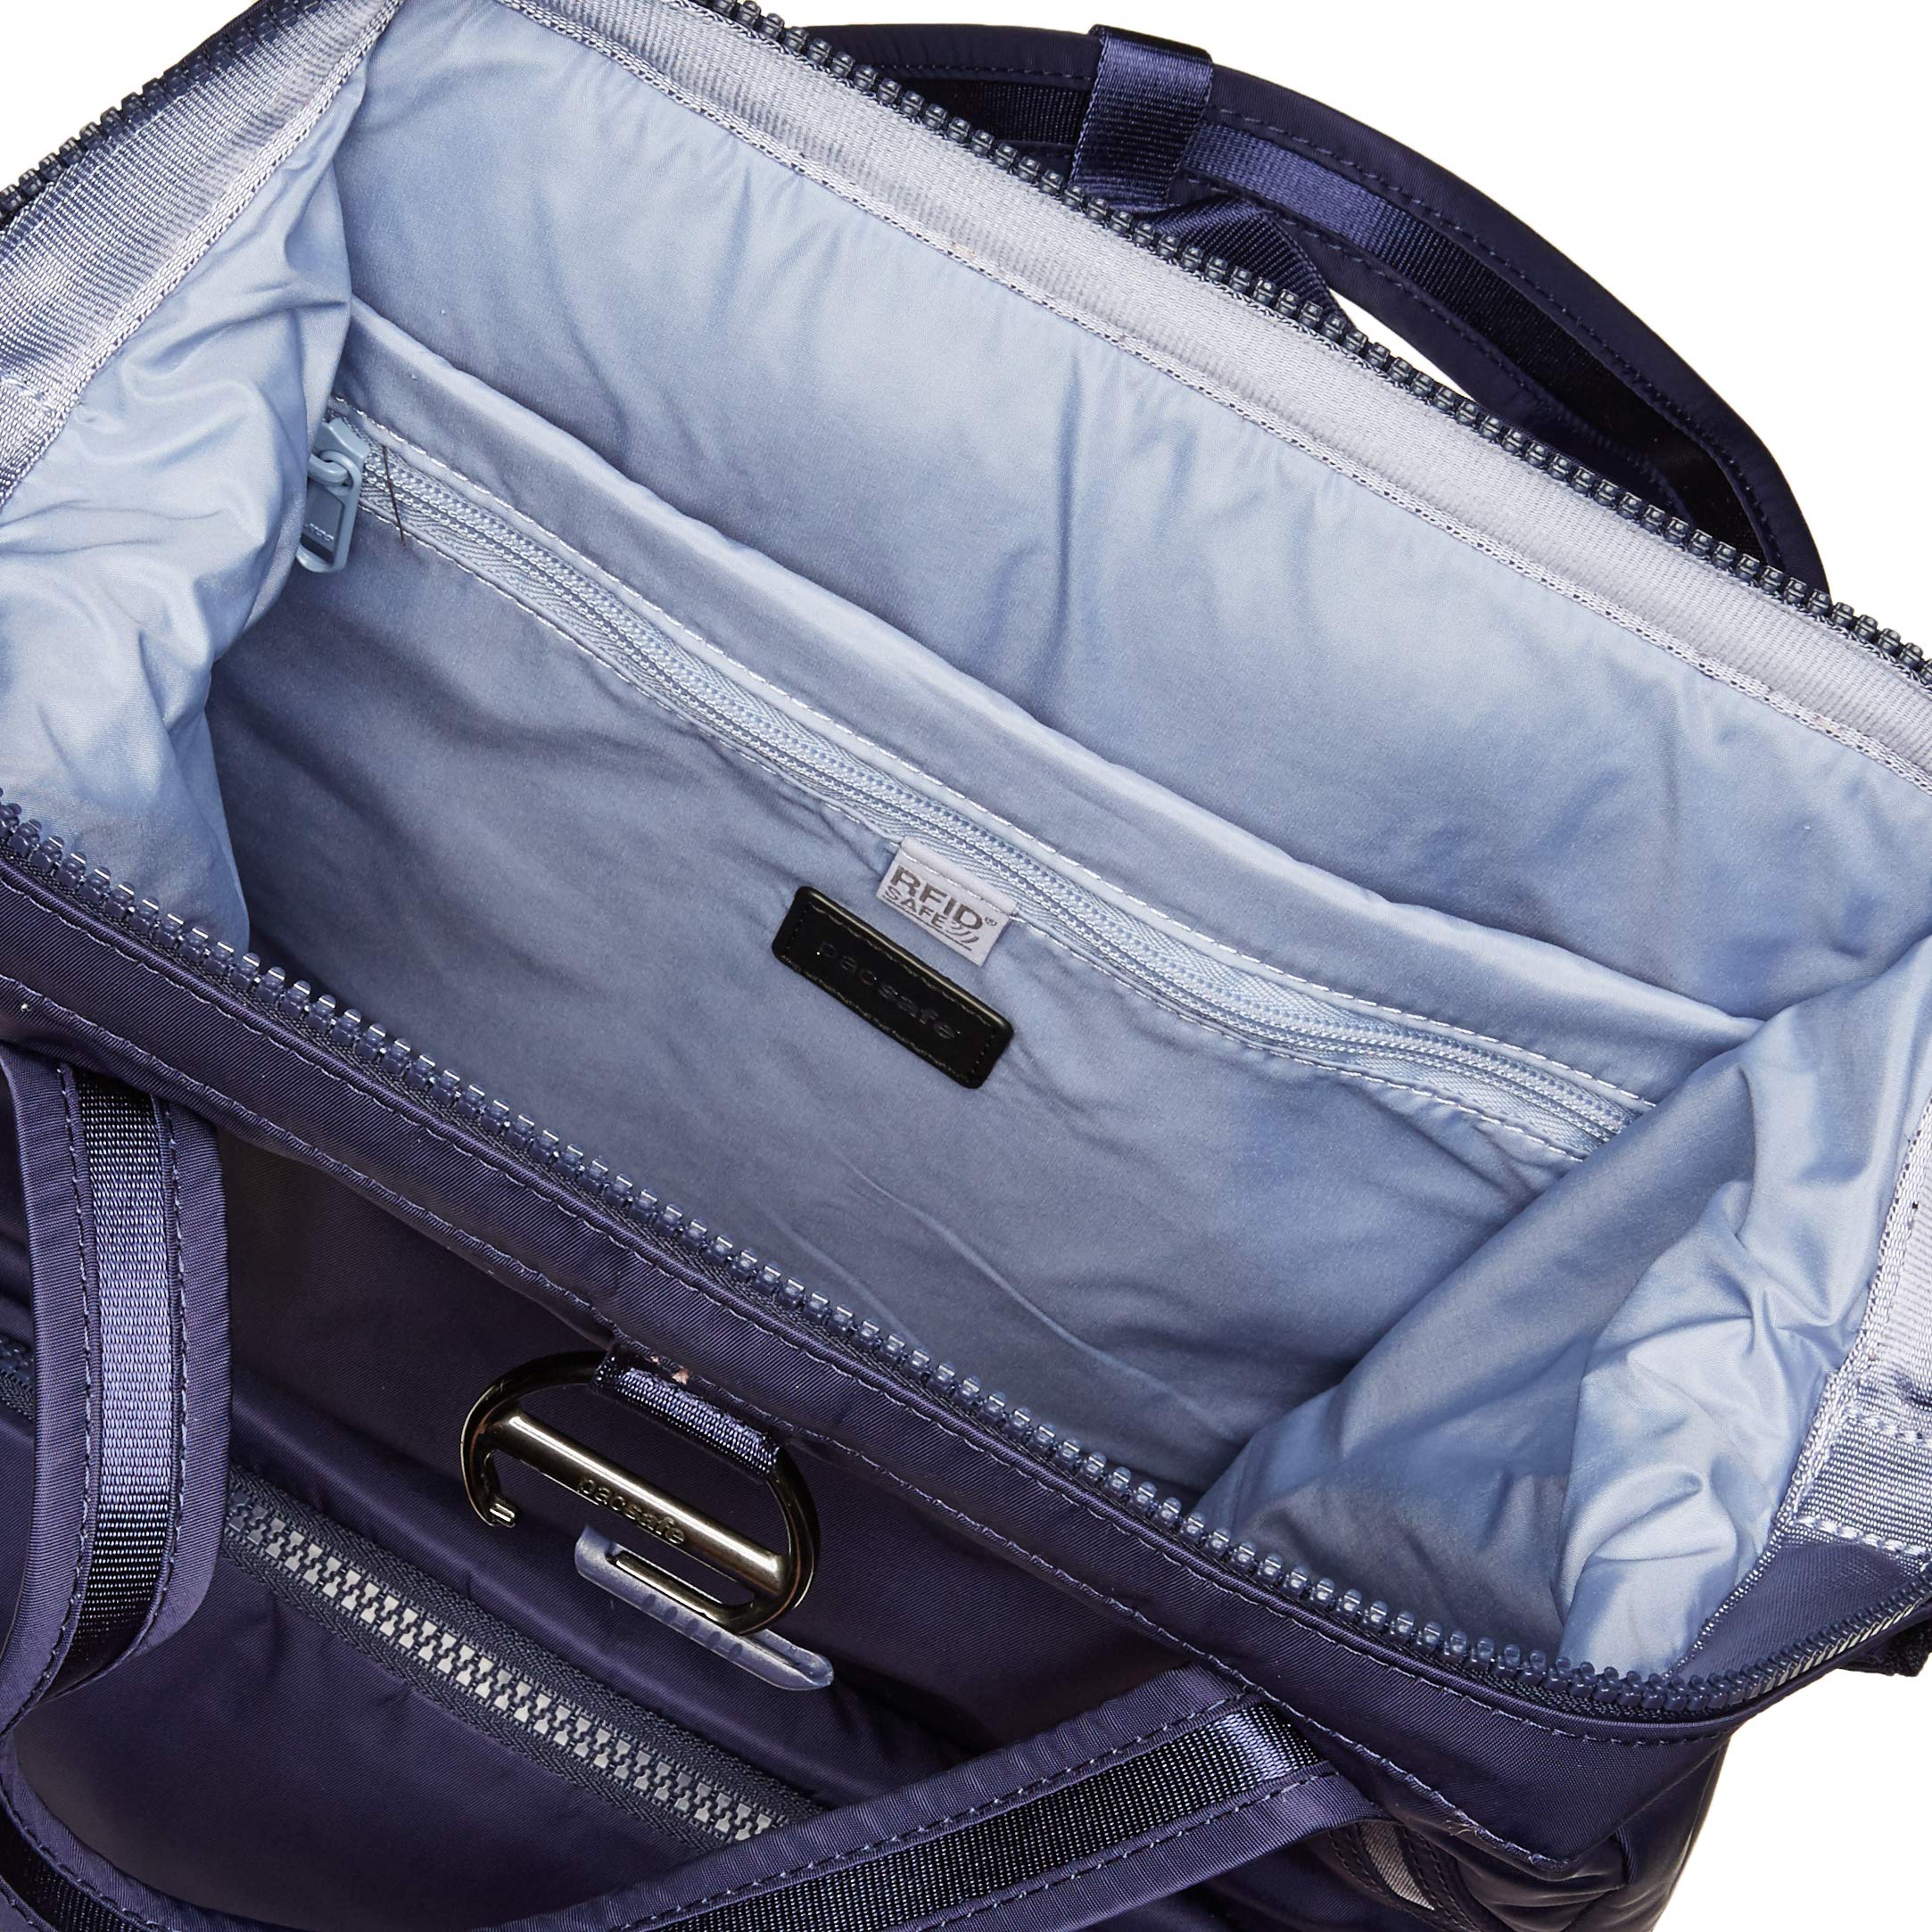  PacSafe Women's Citysafe CX 17L Anti Theft Backpack